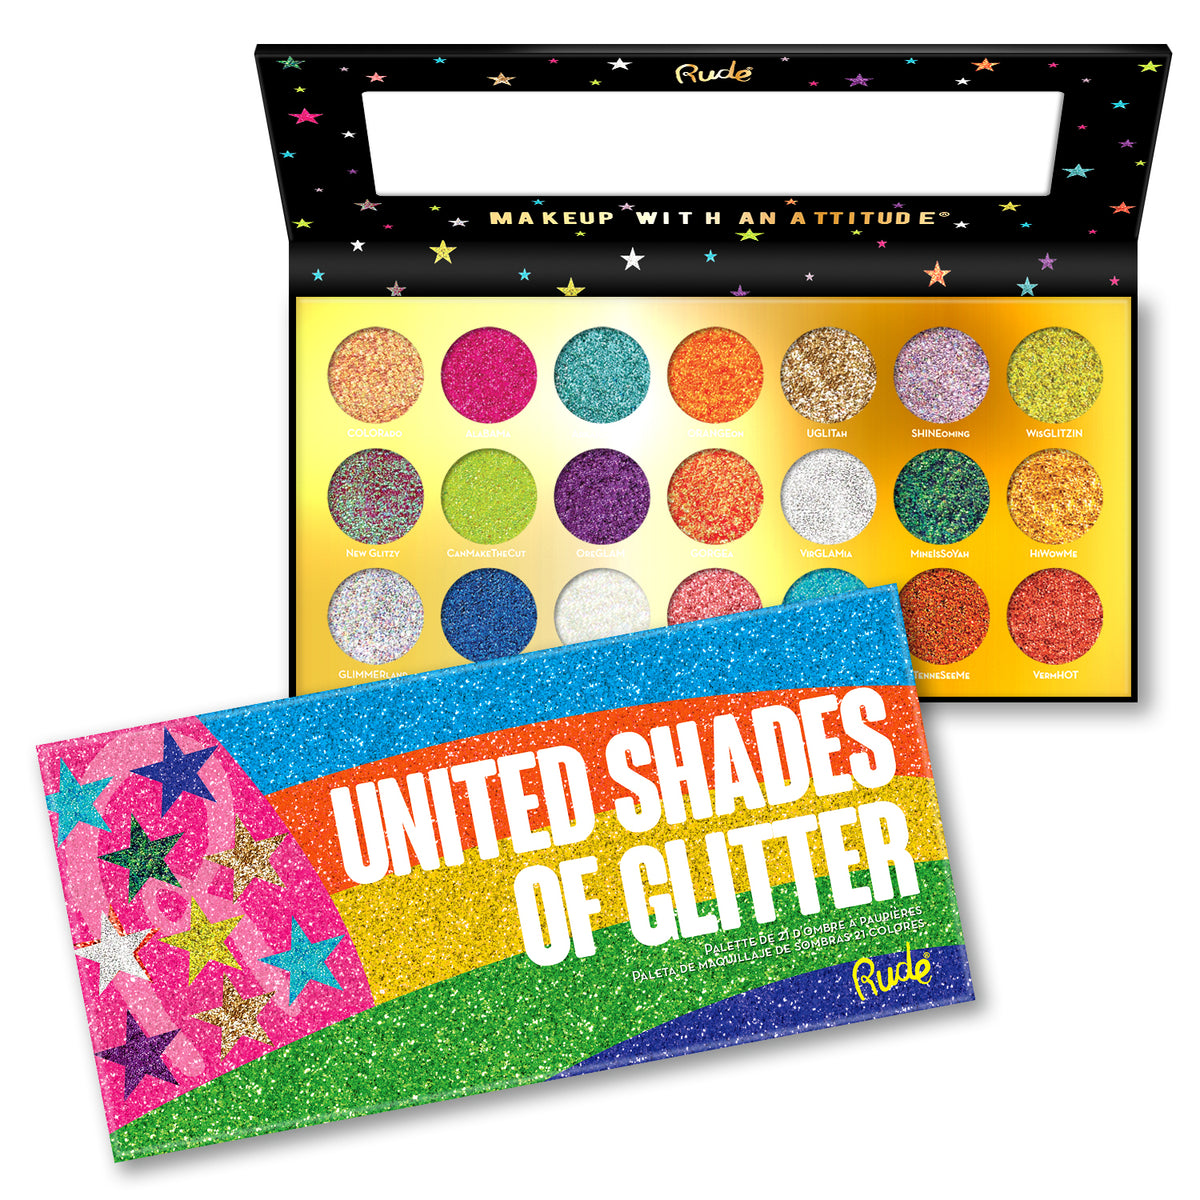 United Shades of Glitter -  21 Pressed Glitter Palette